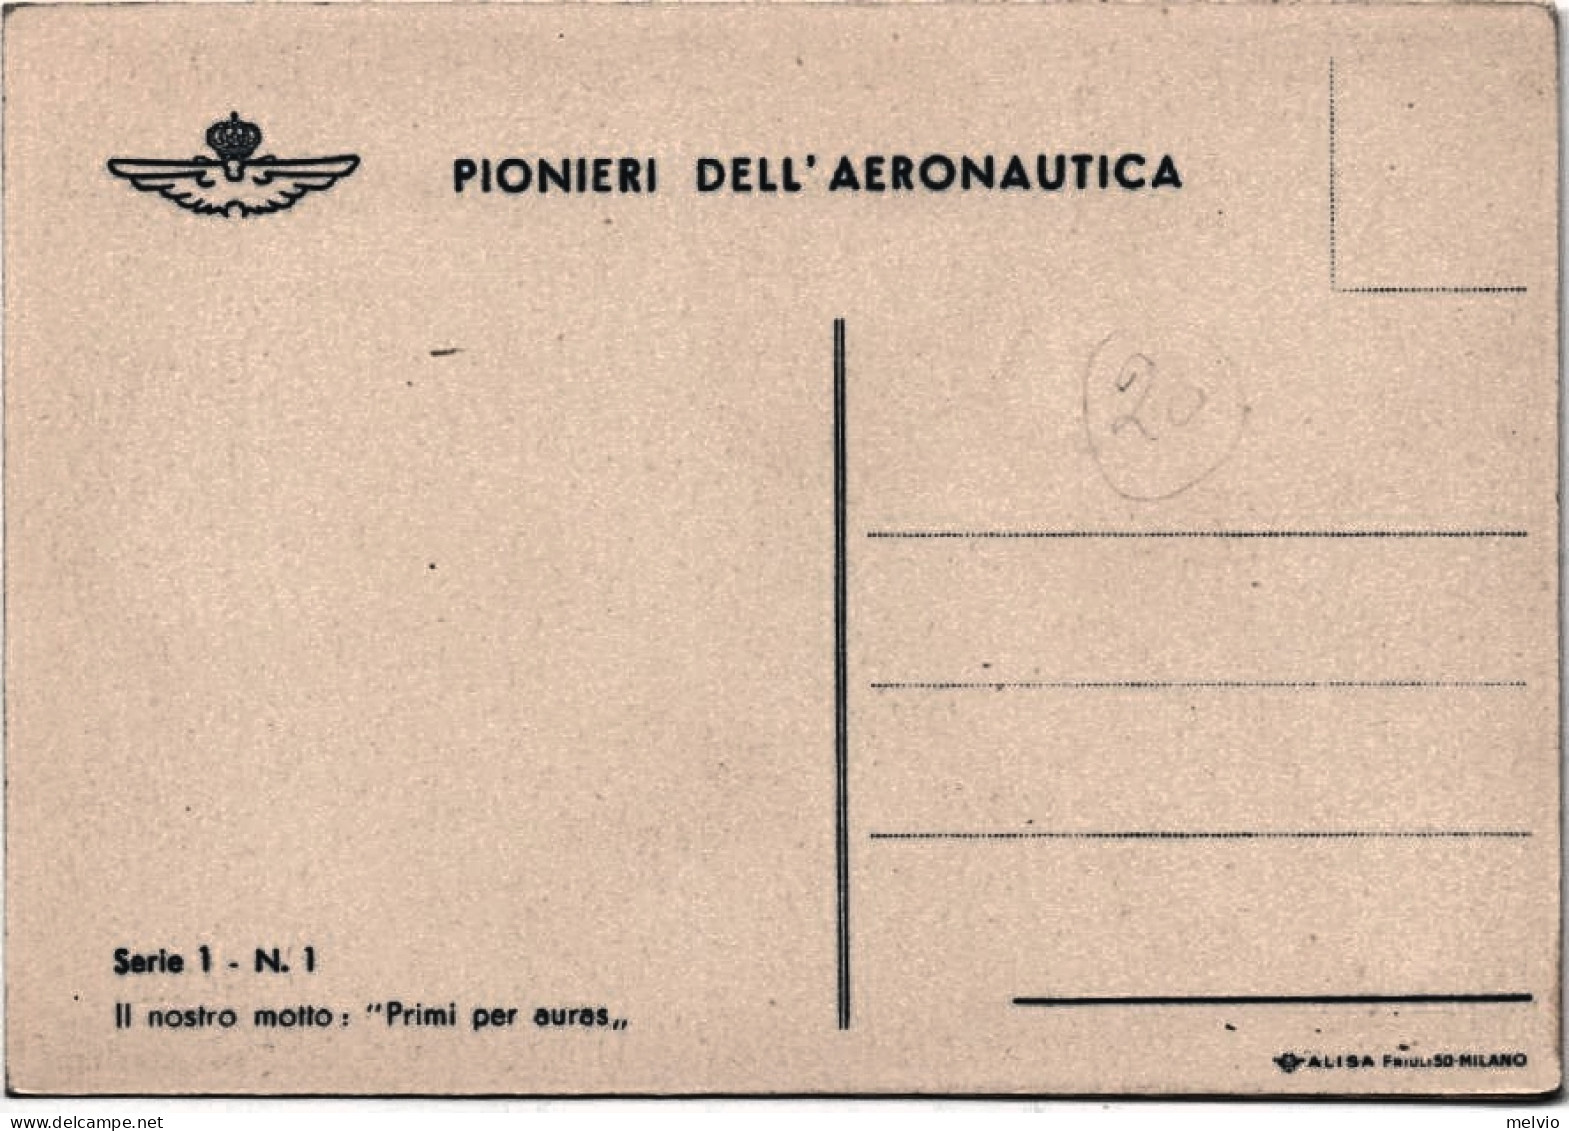 Pionieri Dell'Aeronautica, 2 Agosto1914, "PRIMI PER AURAS" - Patriotic